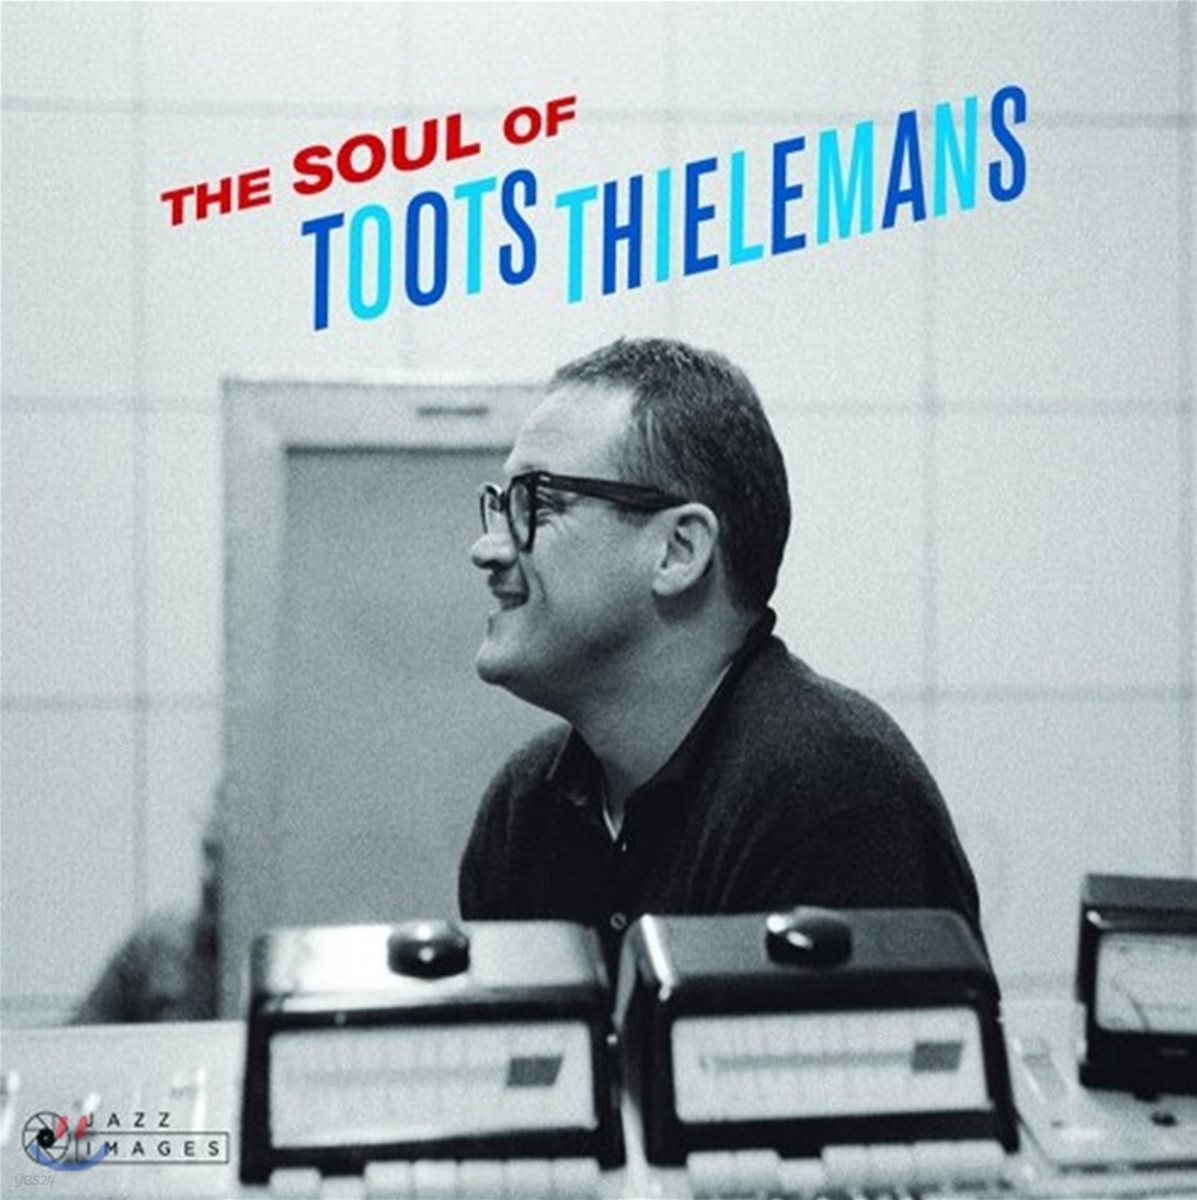 Toots Thielemans (투츠 틸레망) - Soul of Toots Thielemans